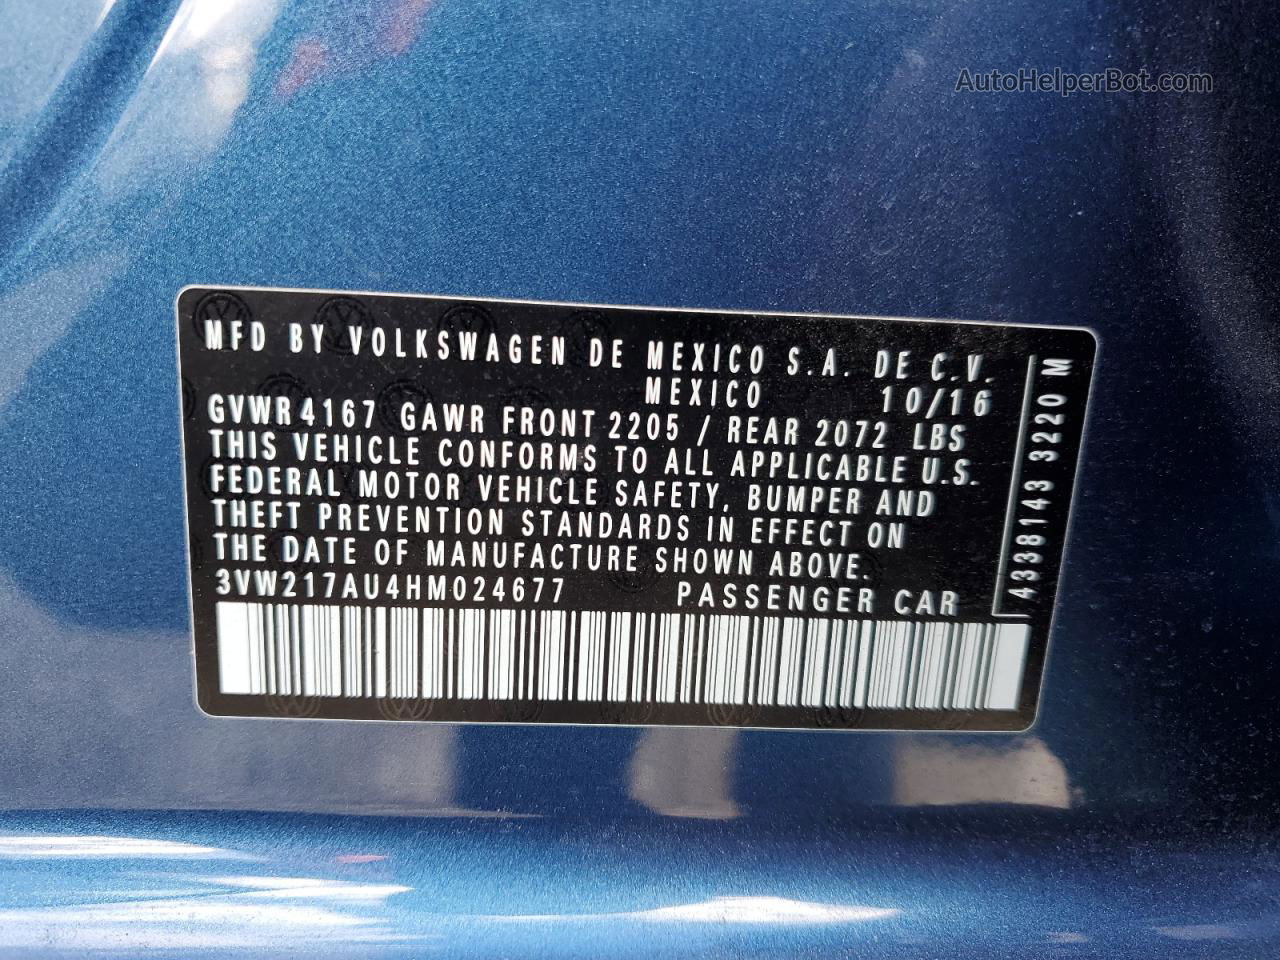 2017 Volkswagen Golf S Blue vin: 3VW217AU4HM024677